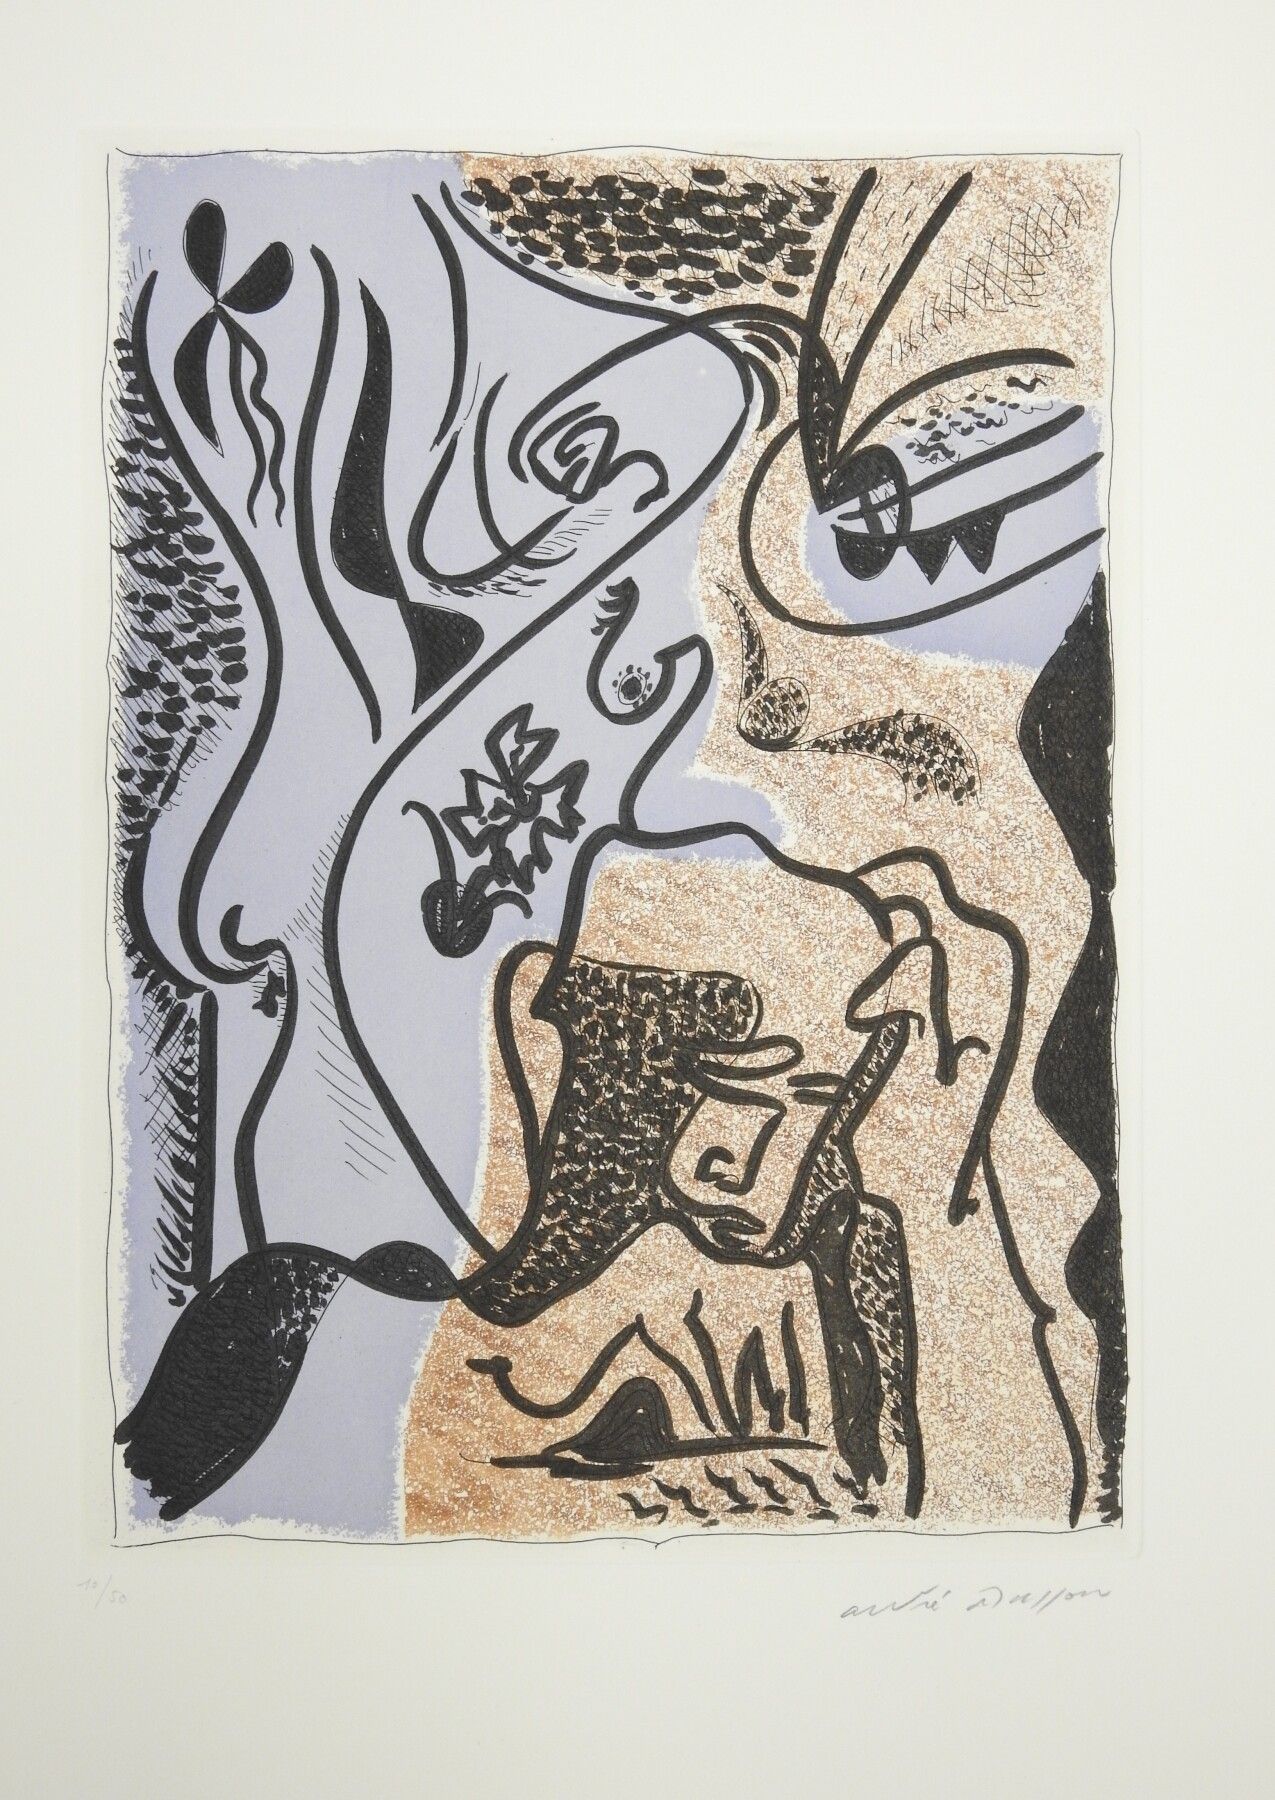 Null 安德烈-马松（1896-1987）：情色主义者。1979.蚀刻和水印。右下方有签名。左边的编号是10/50，52 x 38 cm。